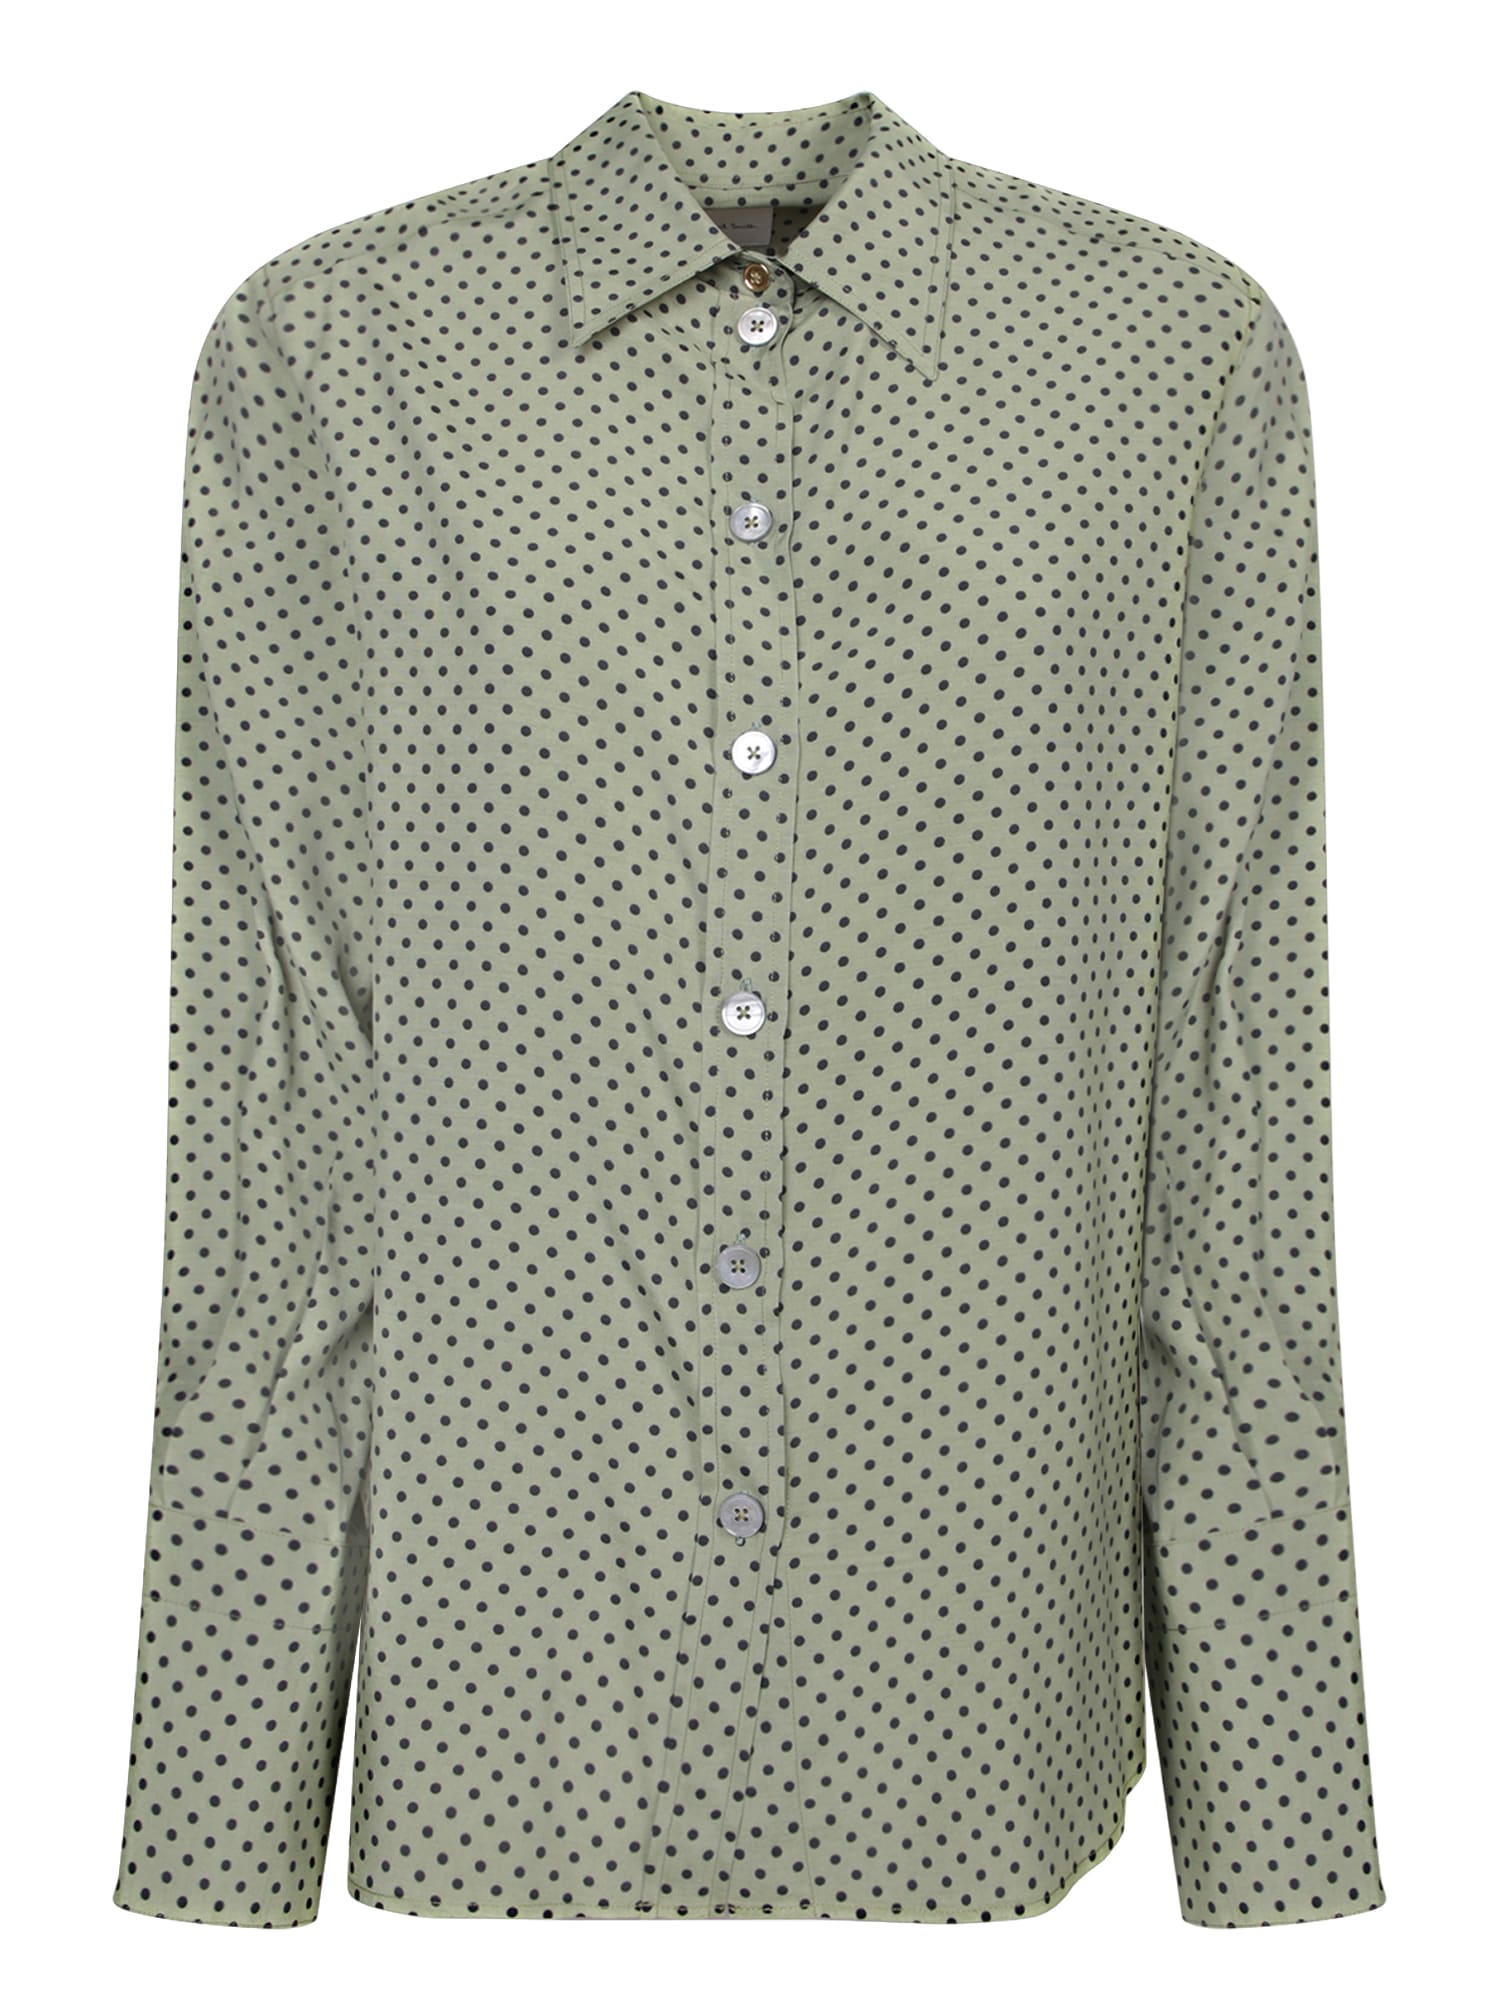 Patterned Green Shirt